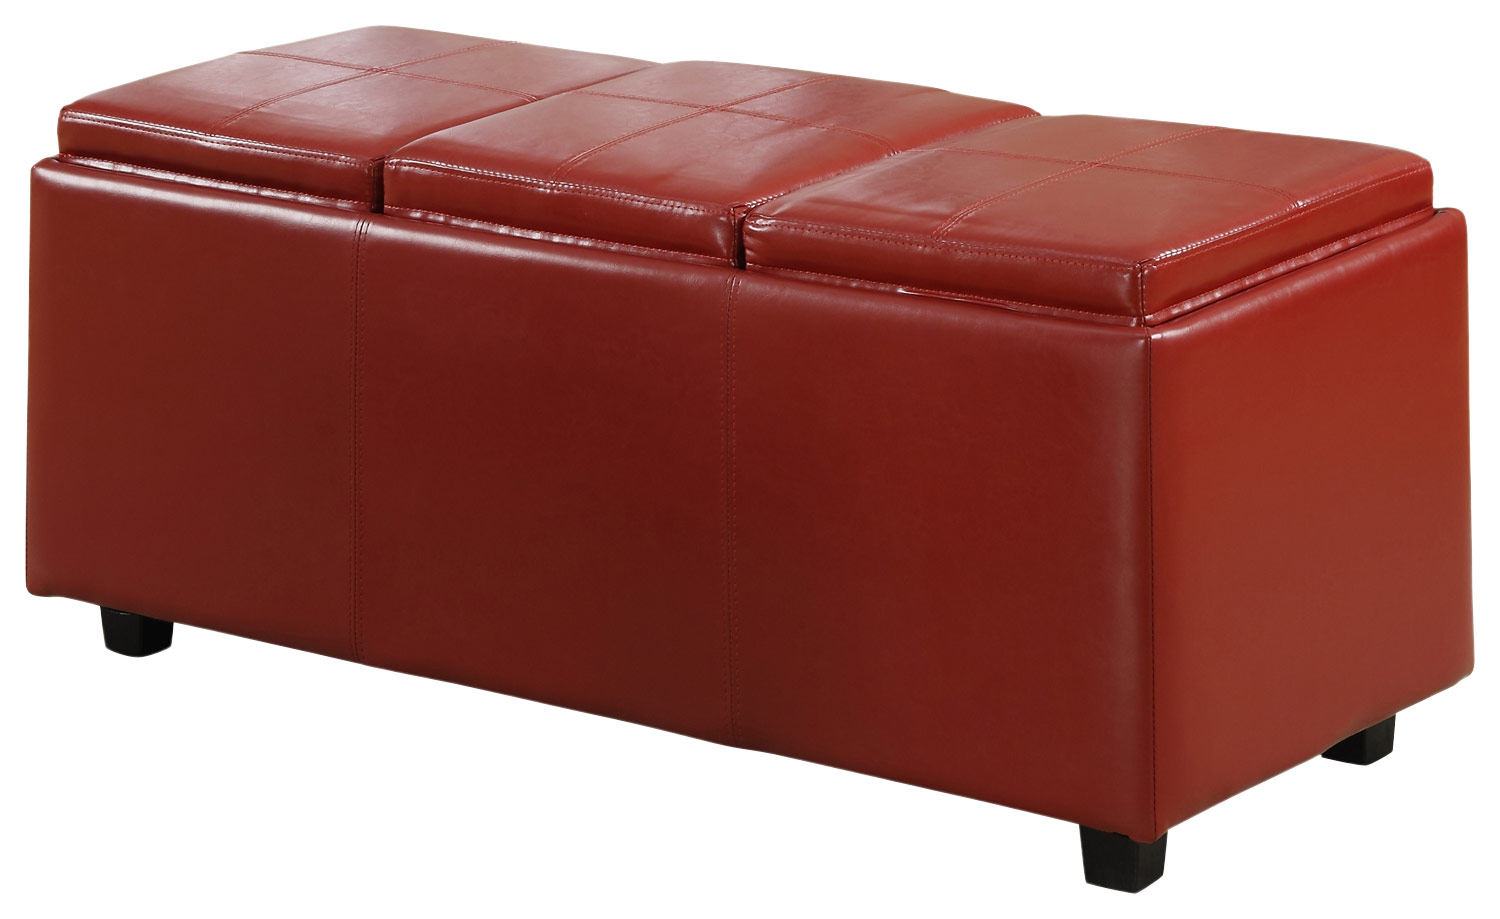 Simpli Home - Avalon Storage Ottoman - Red was $226.99 now $179.99 (21.0% off)